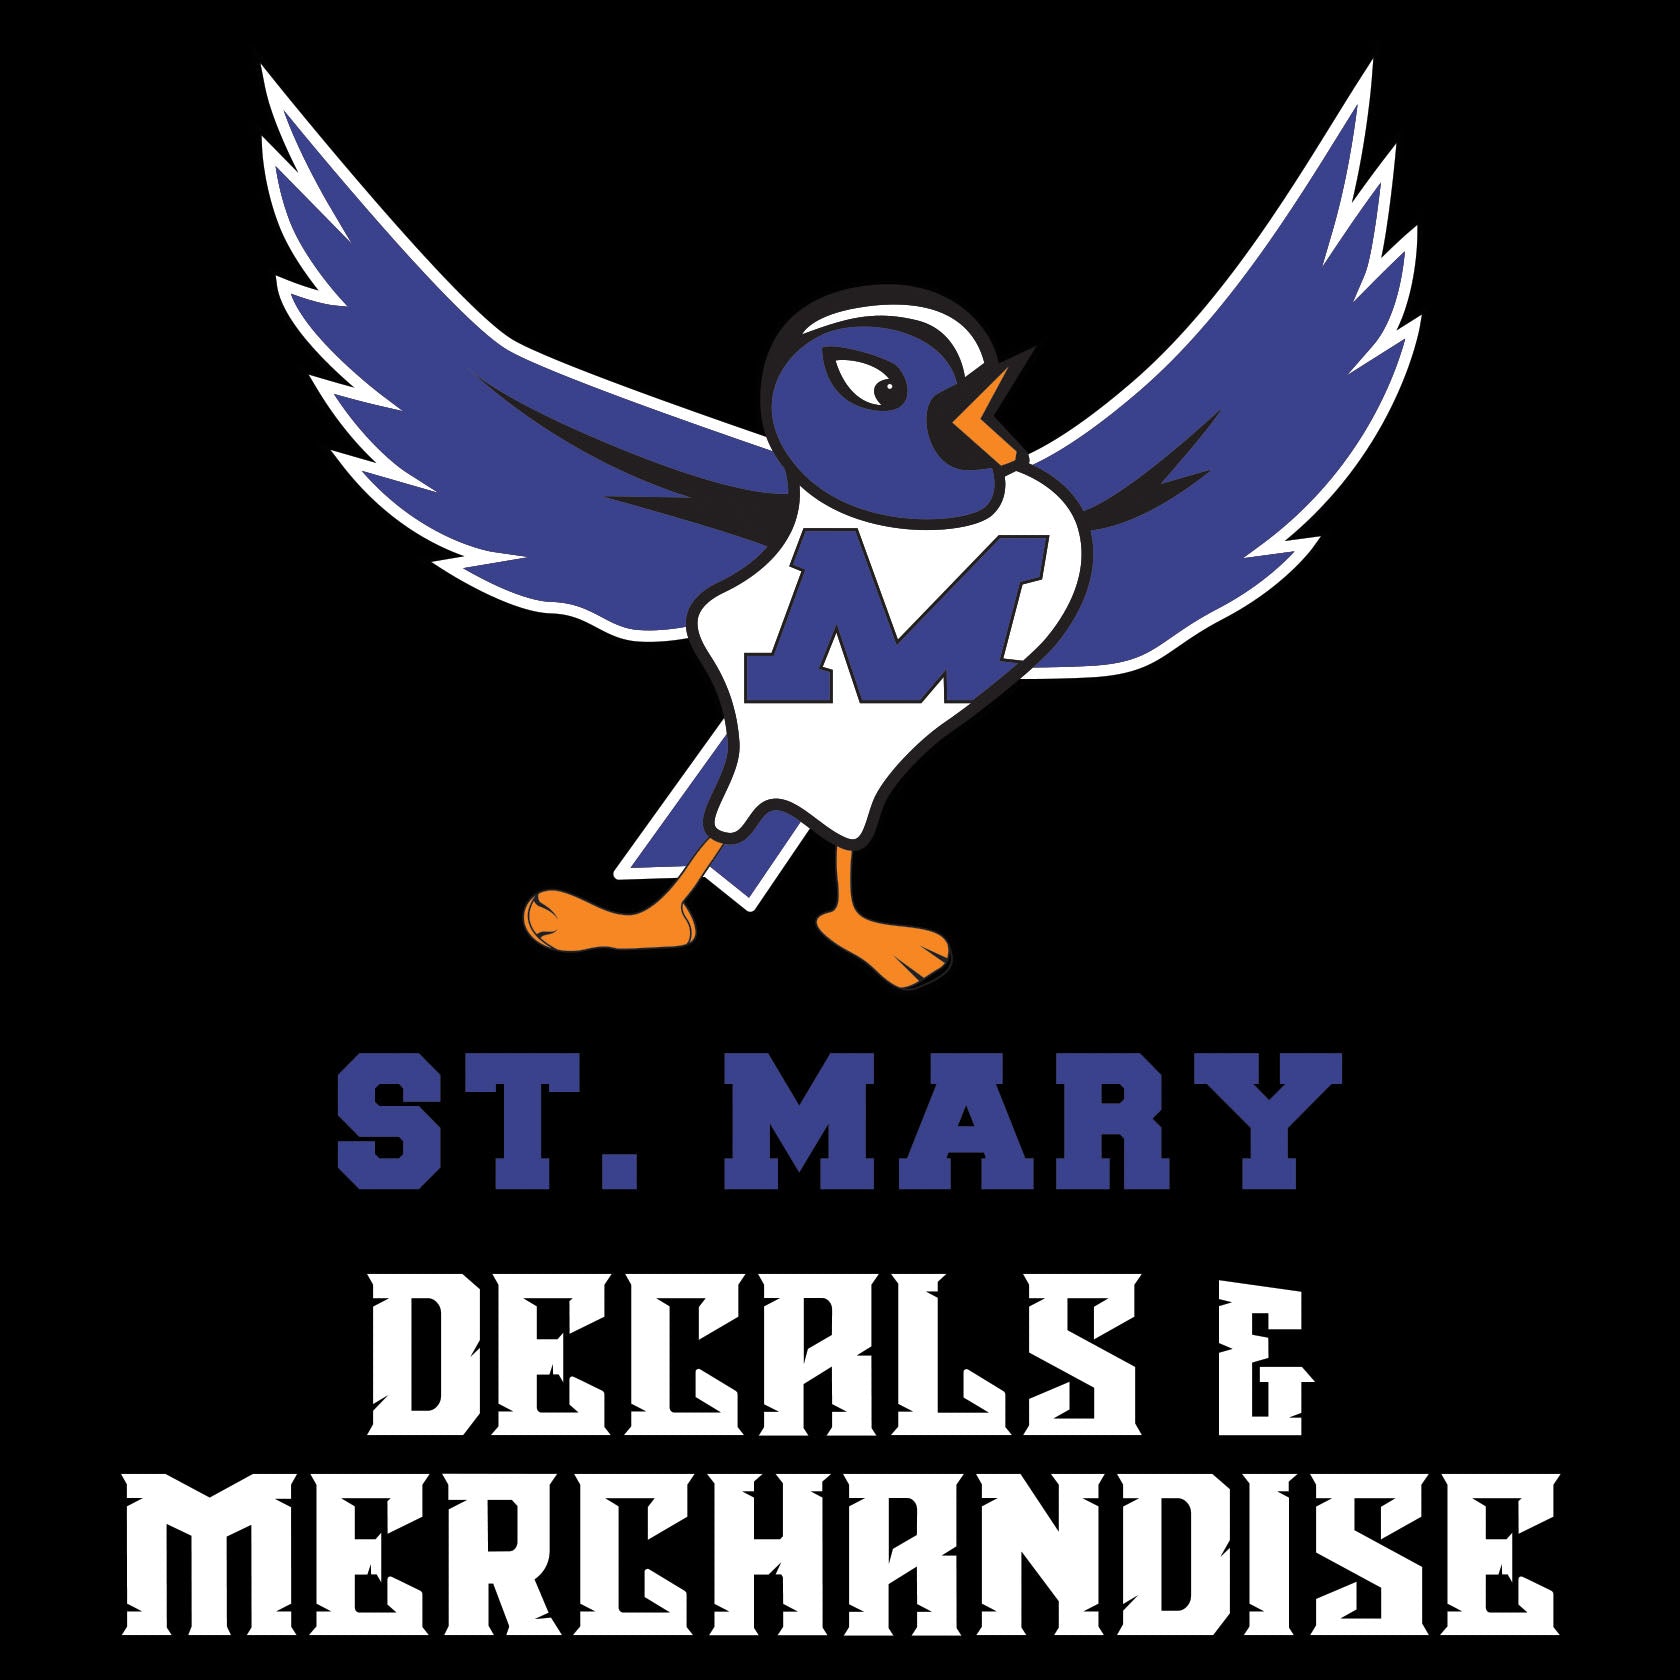 St. Mary's Decals & Merchandise - DecalFreakz